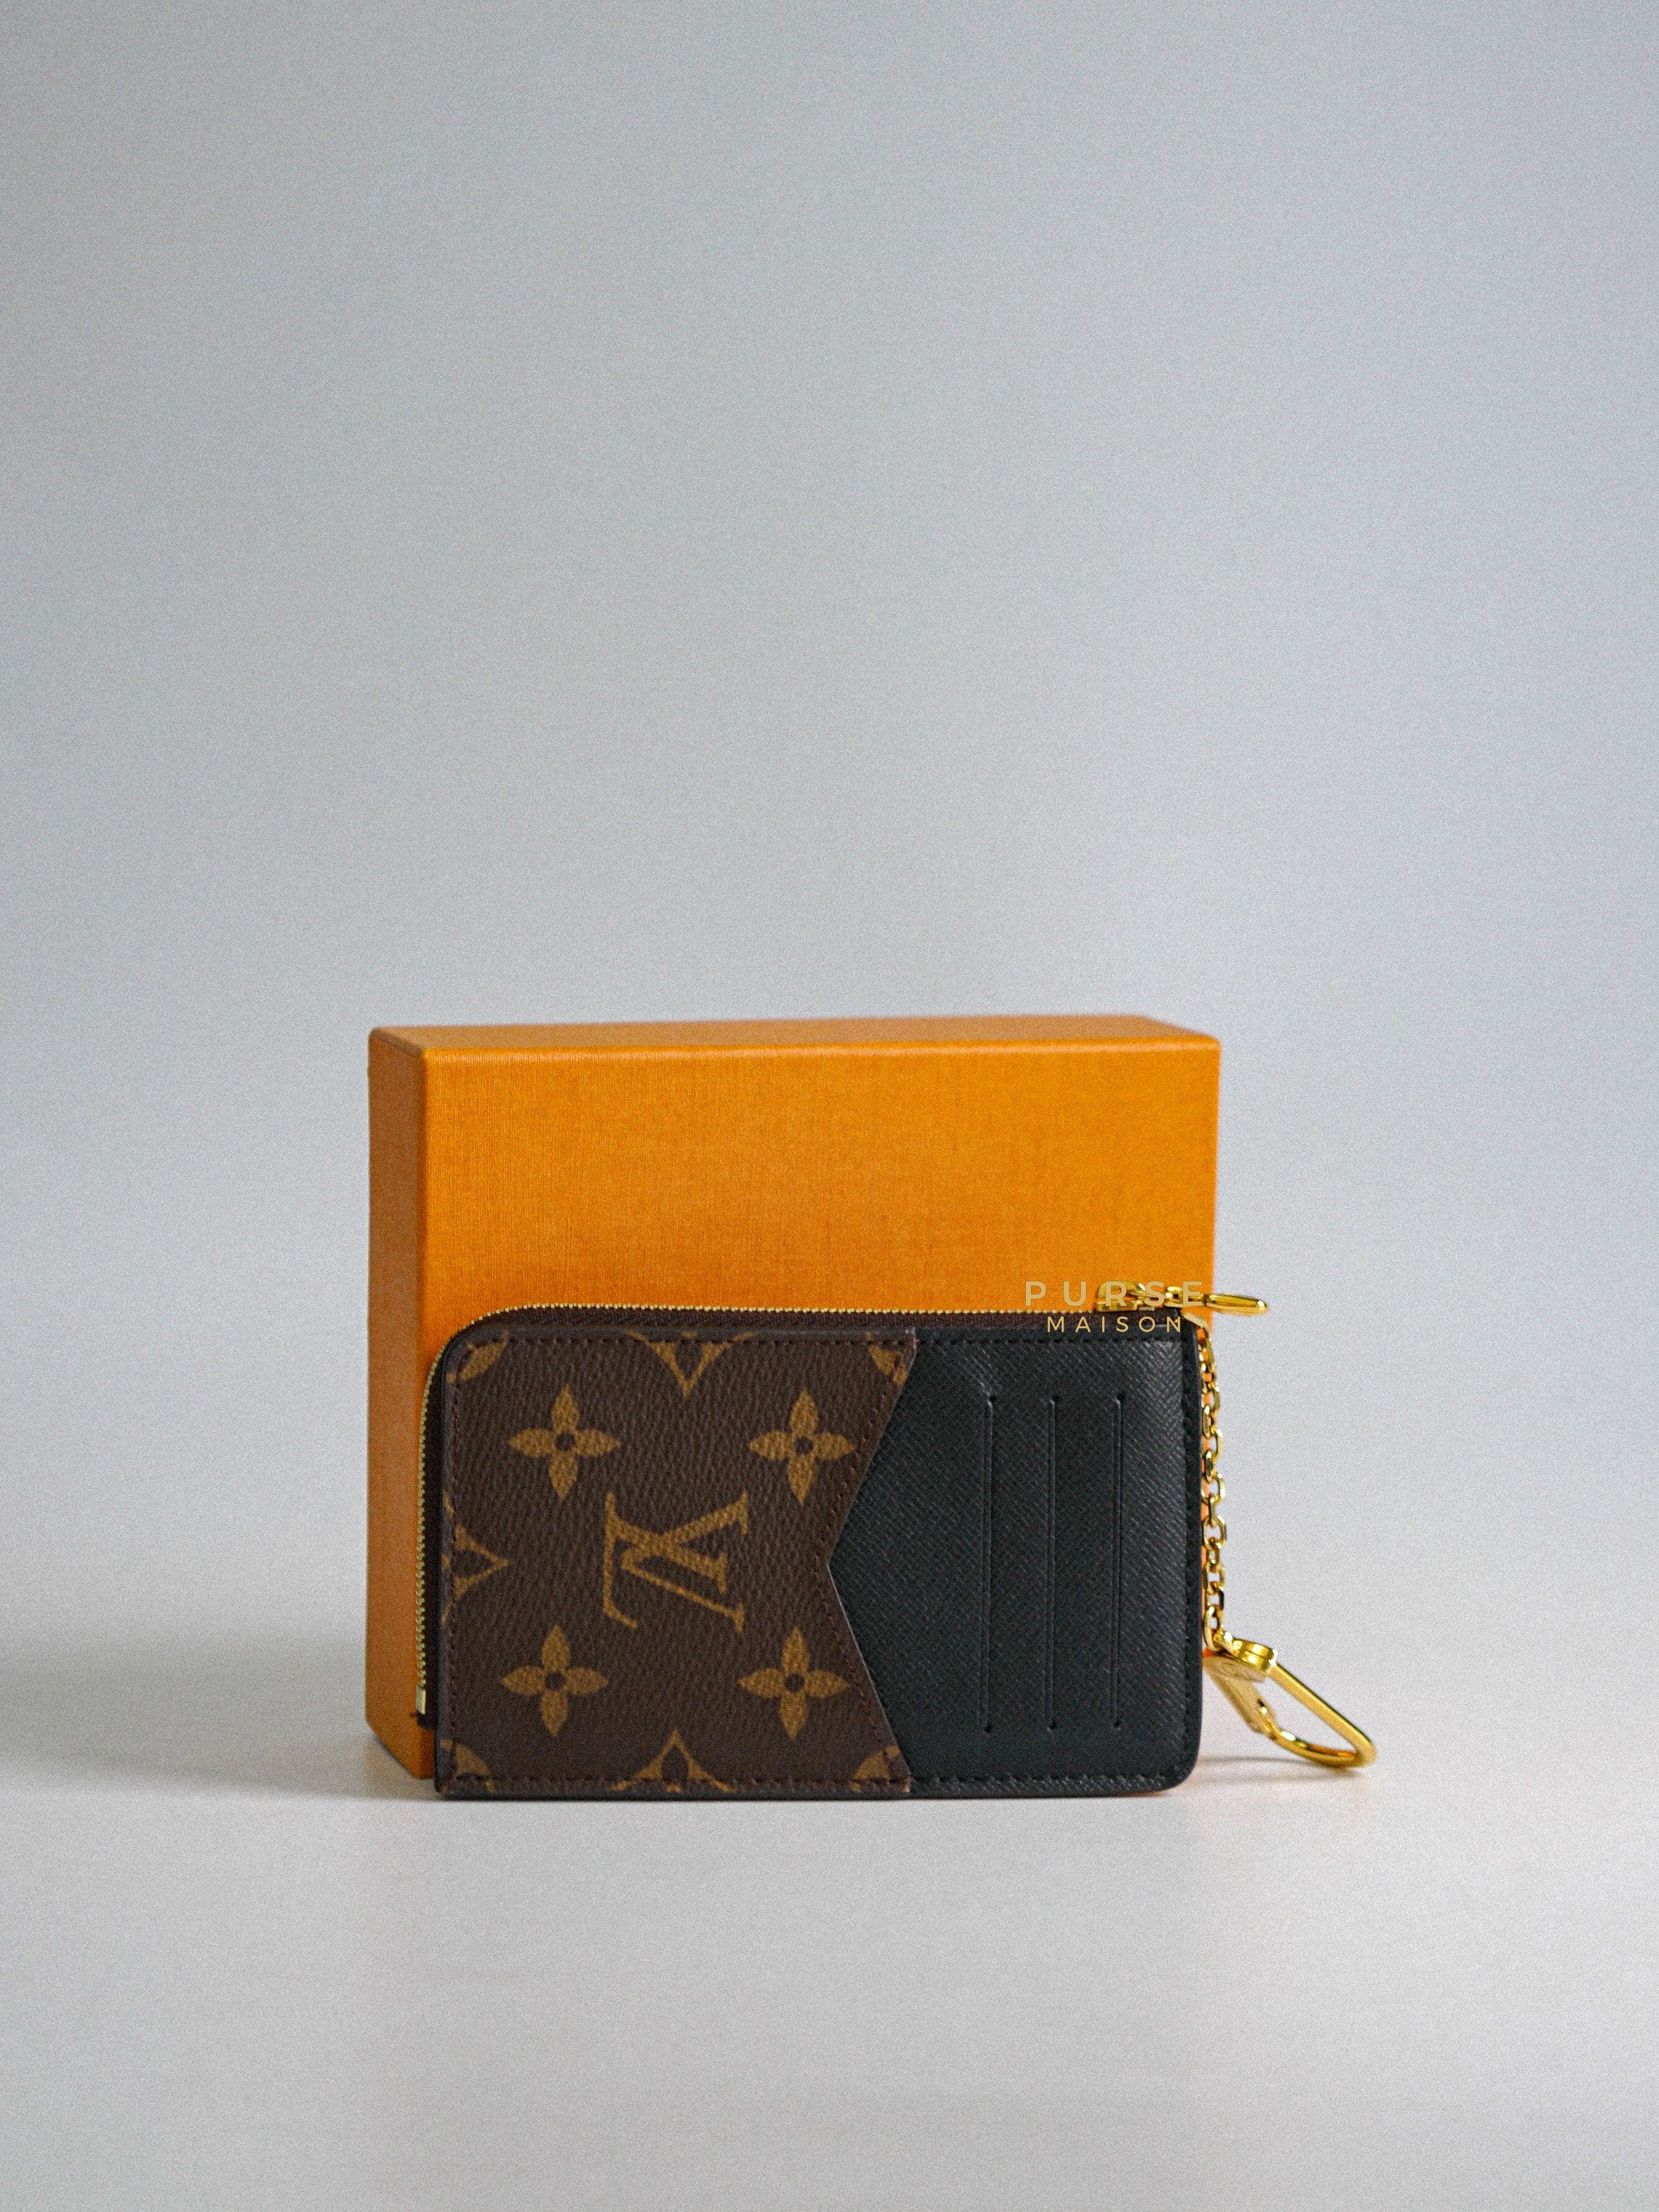 Louis Vuitton Recto Verso Card Holder in Monogram Canvas (Date Code: MI3260) | Purse Maison Luxury Bags Shop